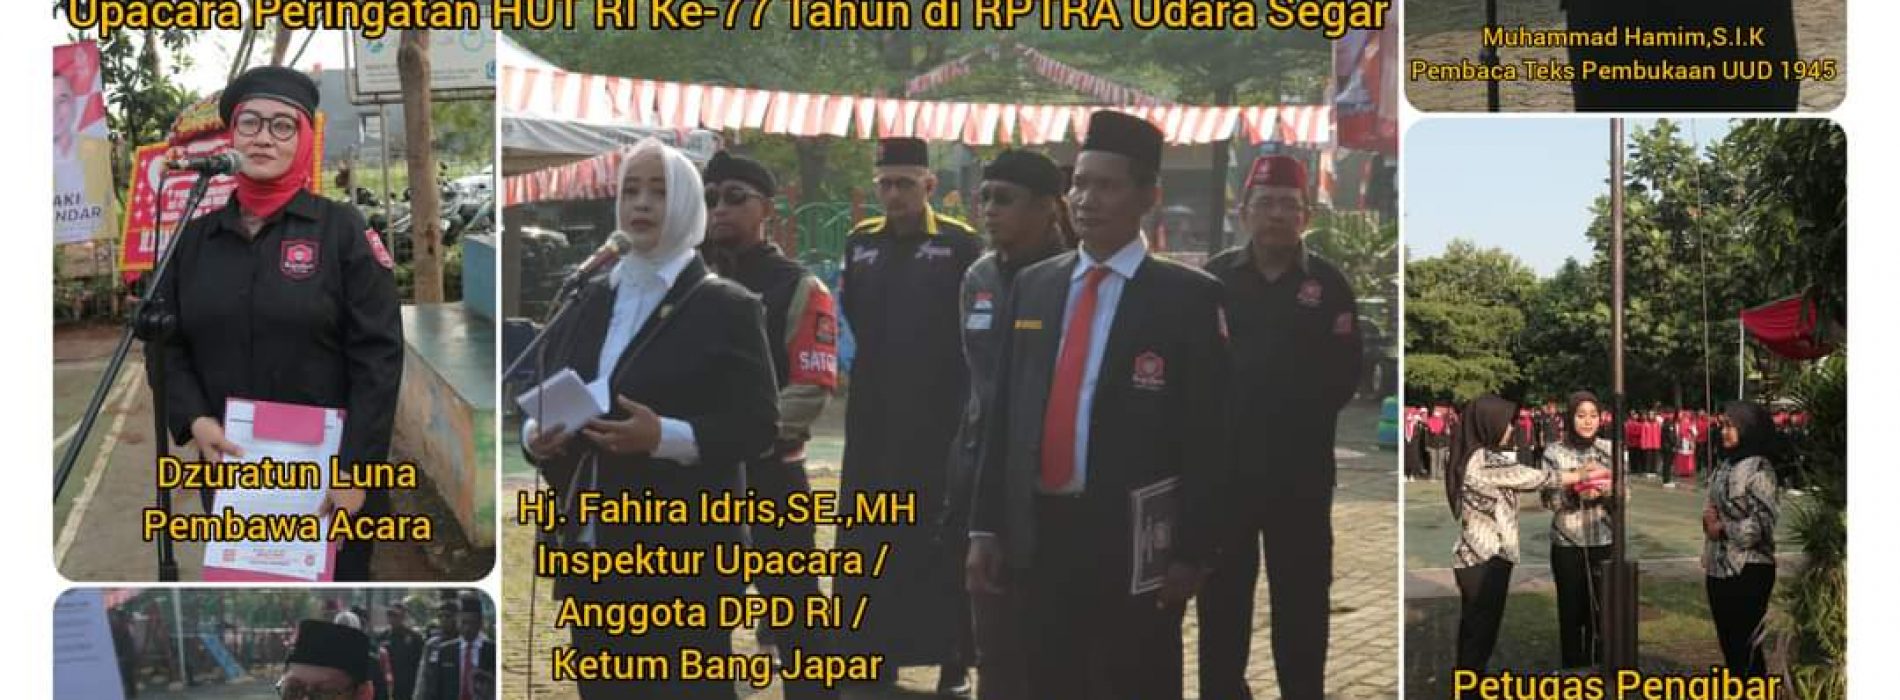 Fahira Idris Gelar Upacara HUT RI Ke-77 bersama Bang Japar Jaktim di RPTRA Udara Segar.